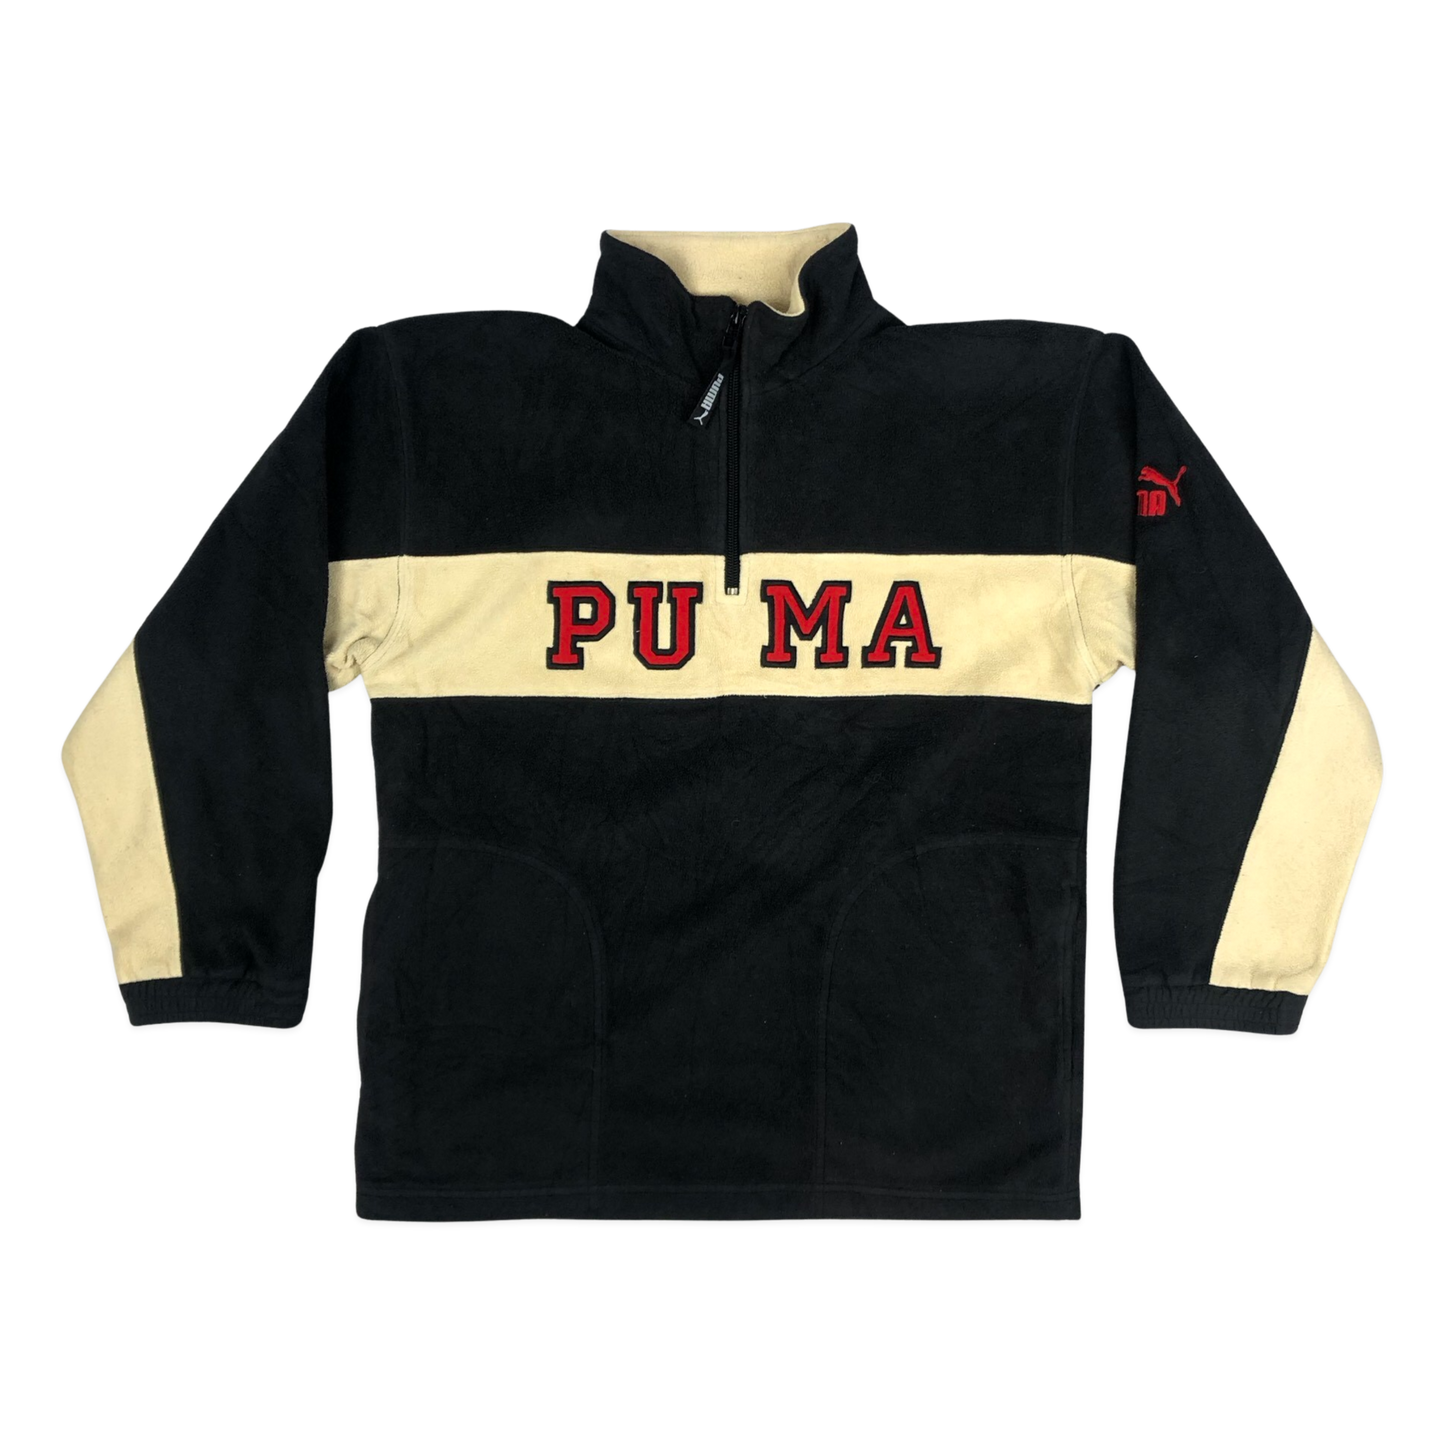 Vintage 90s 00s Puma Black and Beige Fleece Pullover M